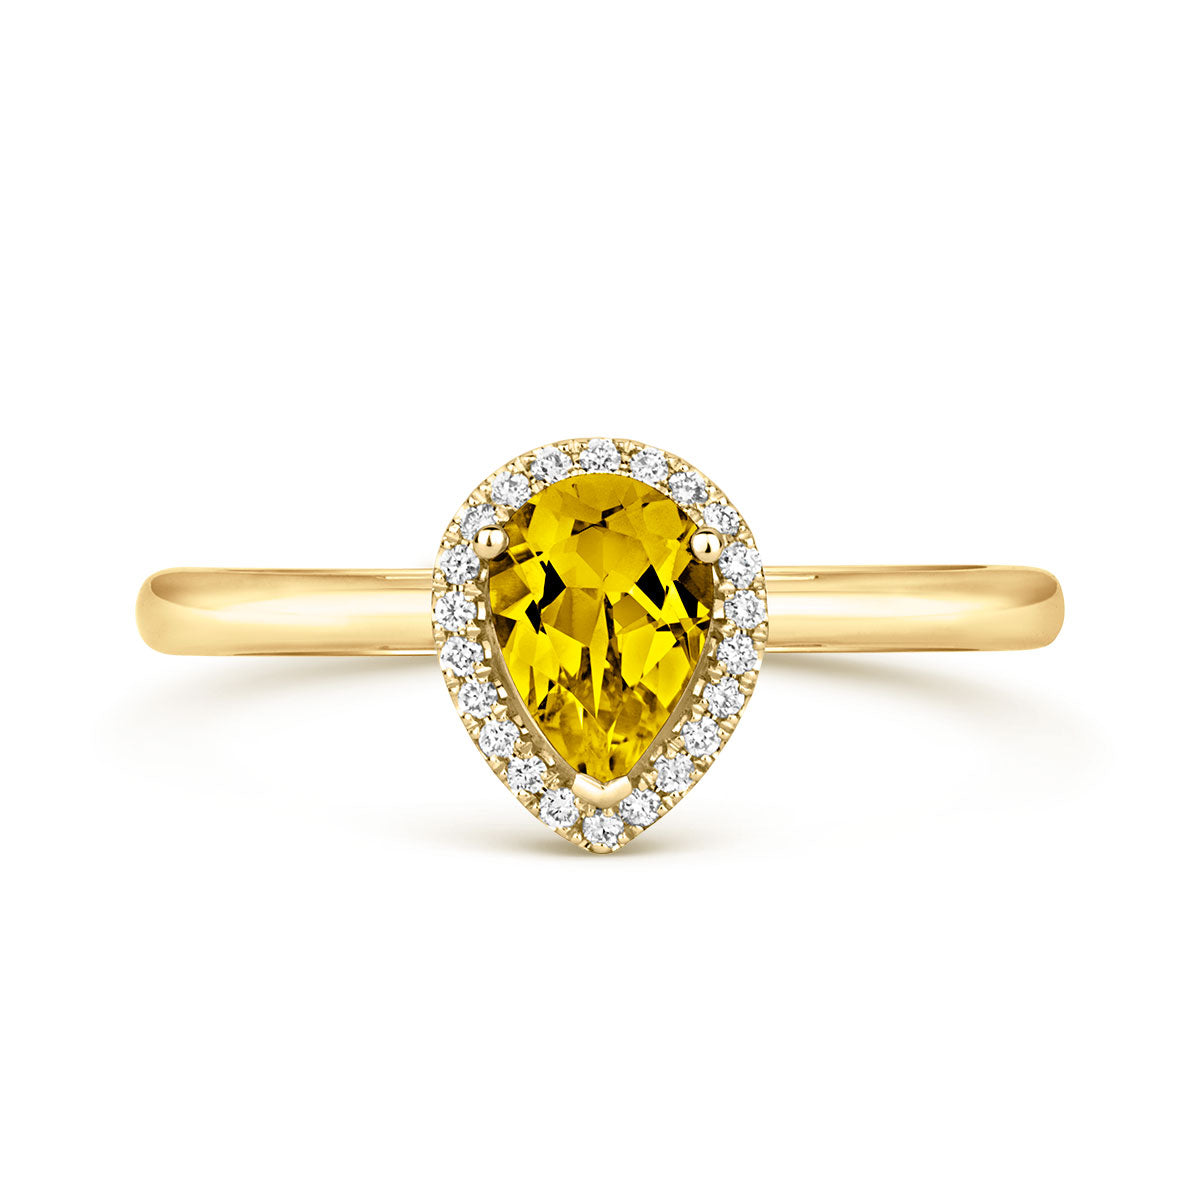 TIVON 18ct Yellow Gold Lemon Quartz & Diamond Ring - Size N